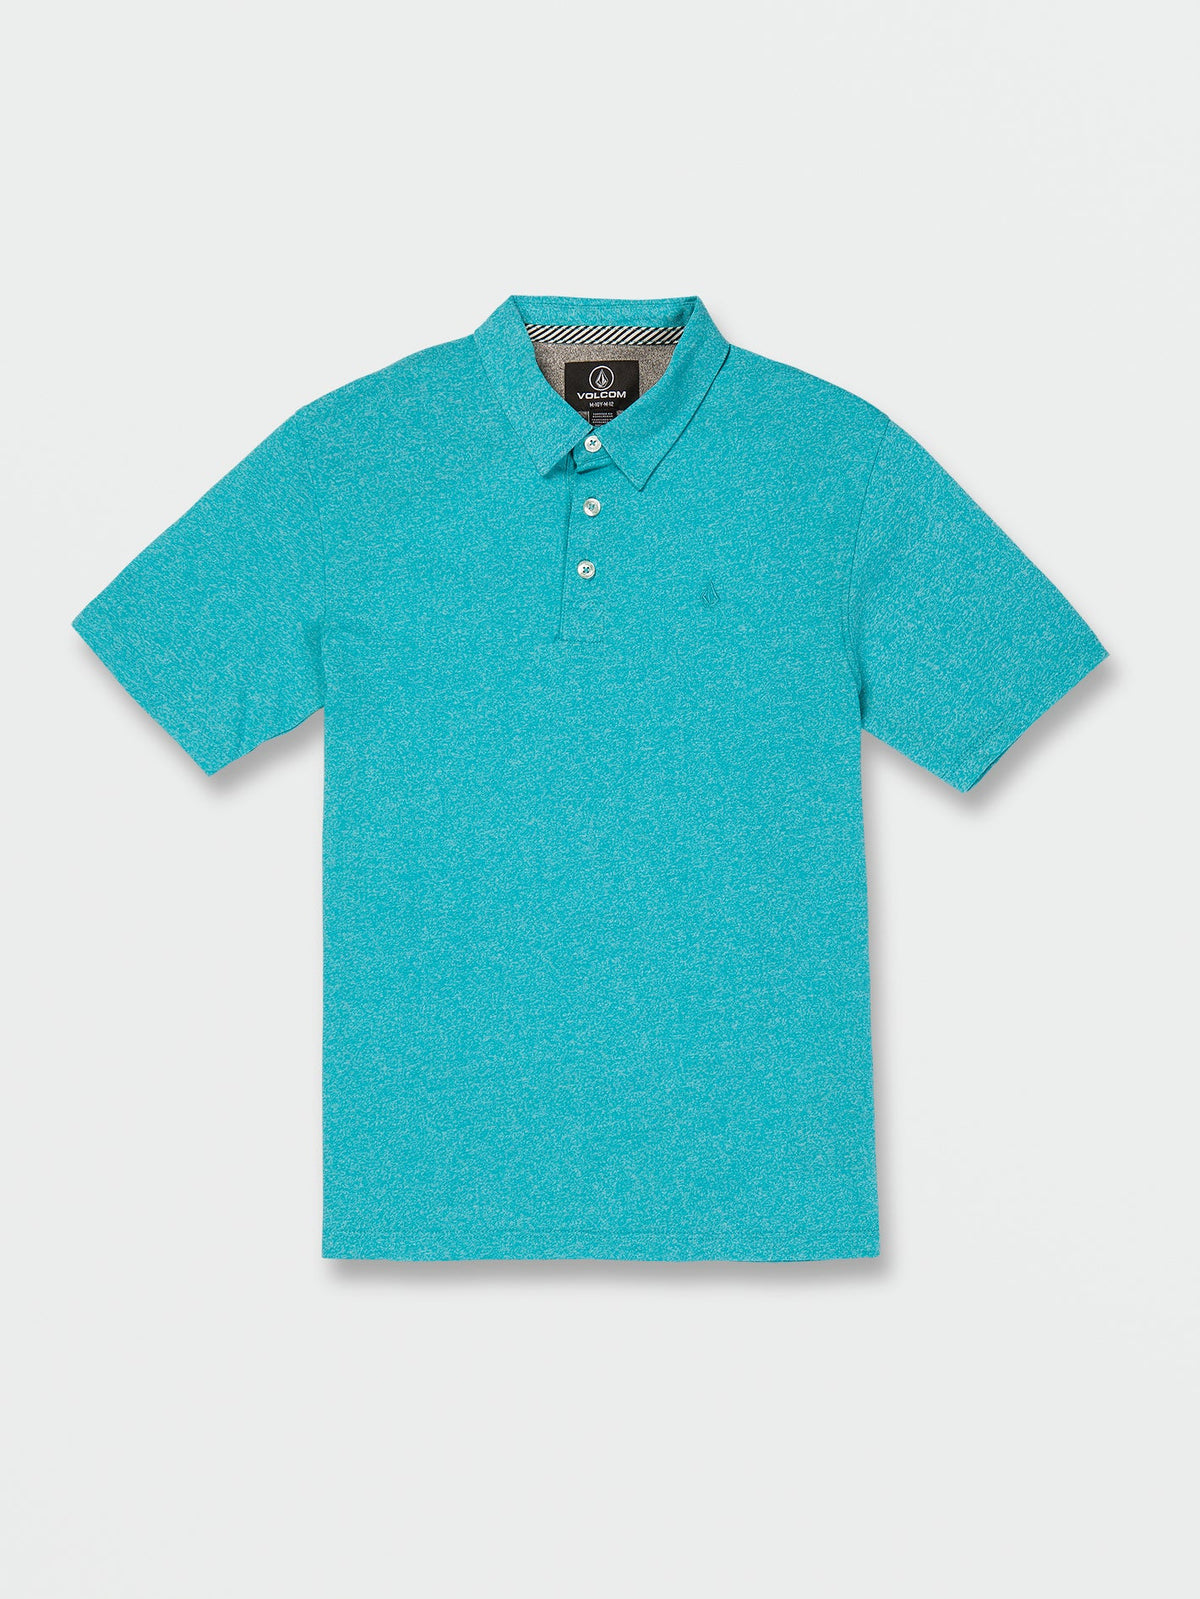 Volcom Wowzer Polo Boys Short Sleeve Shirt (Age 8-14) Electric Blue